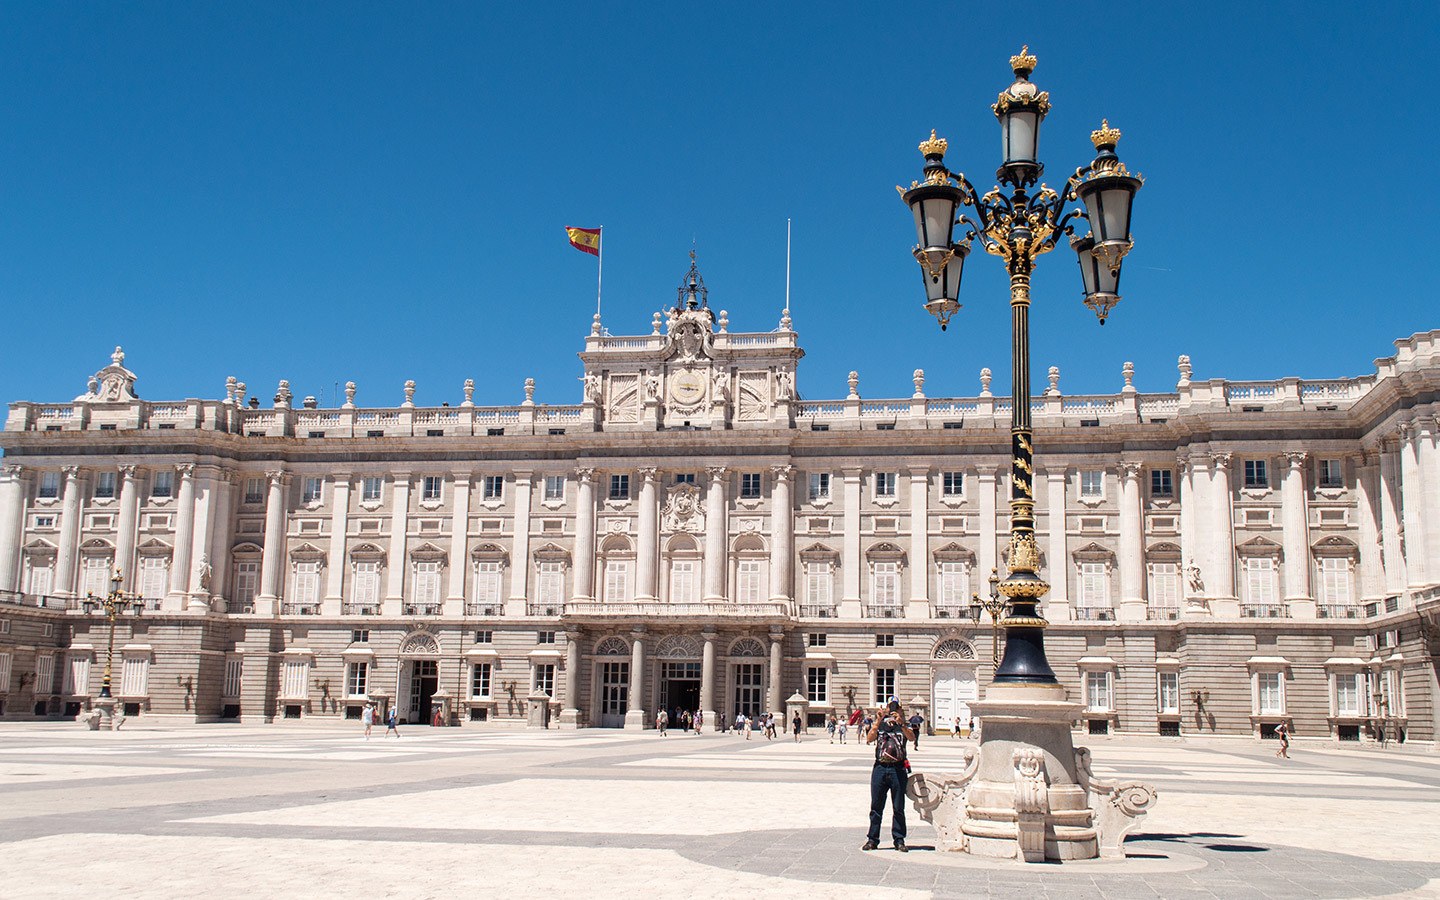 Madrid's Palacio Real